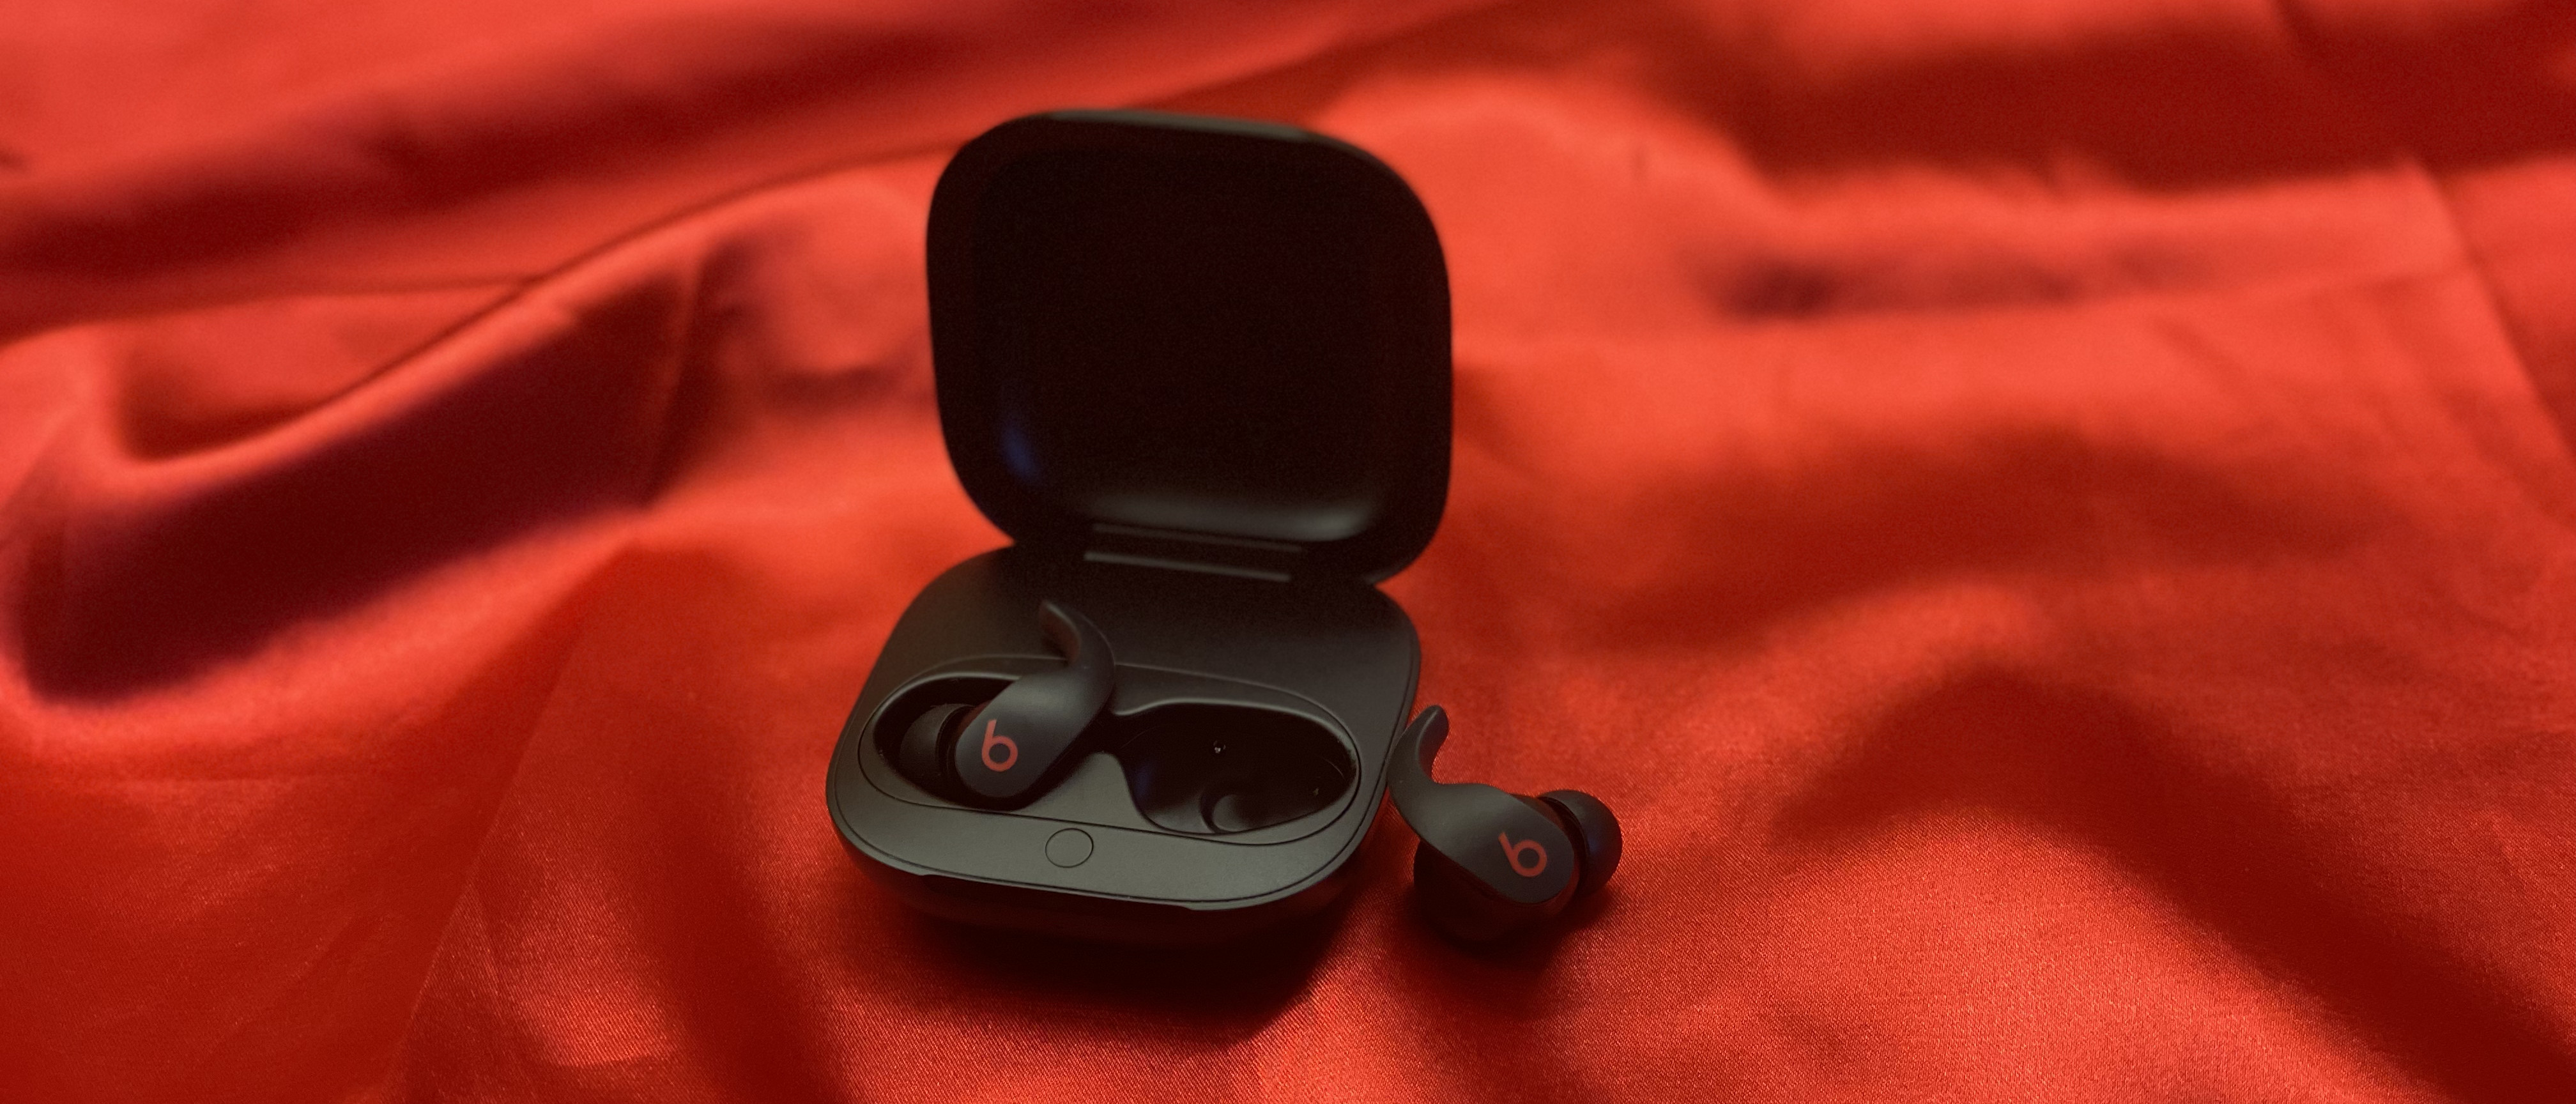 Beats Fit Pro are Apple's best wireless earbuds yet